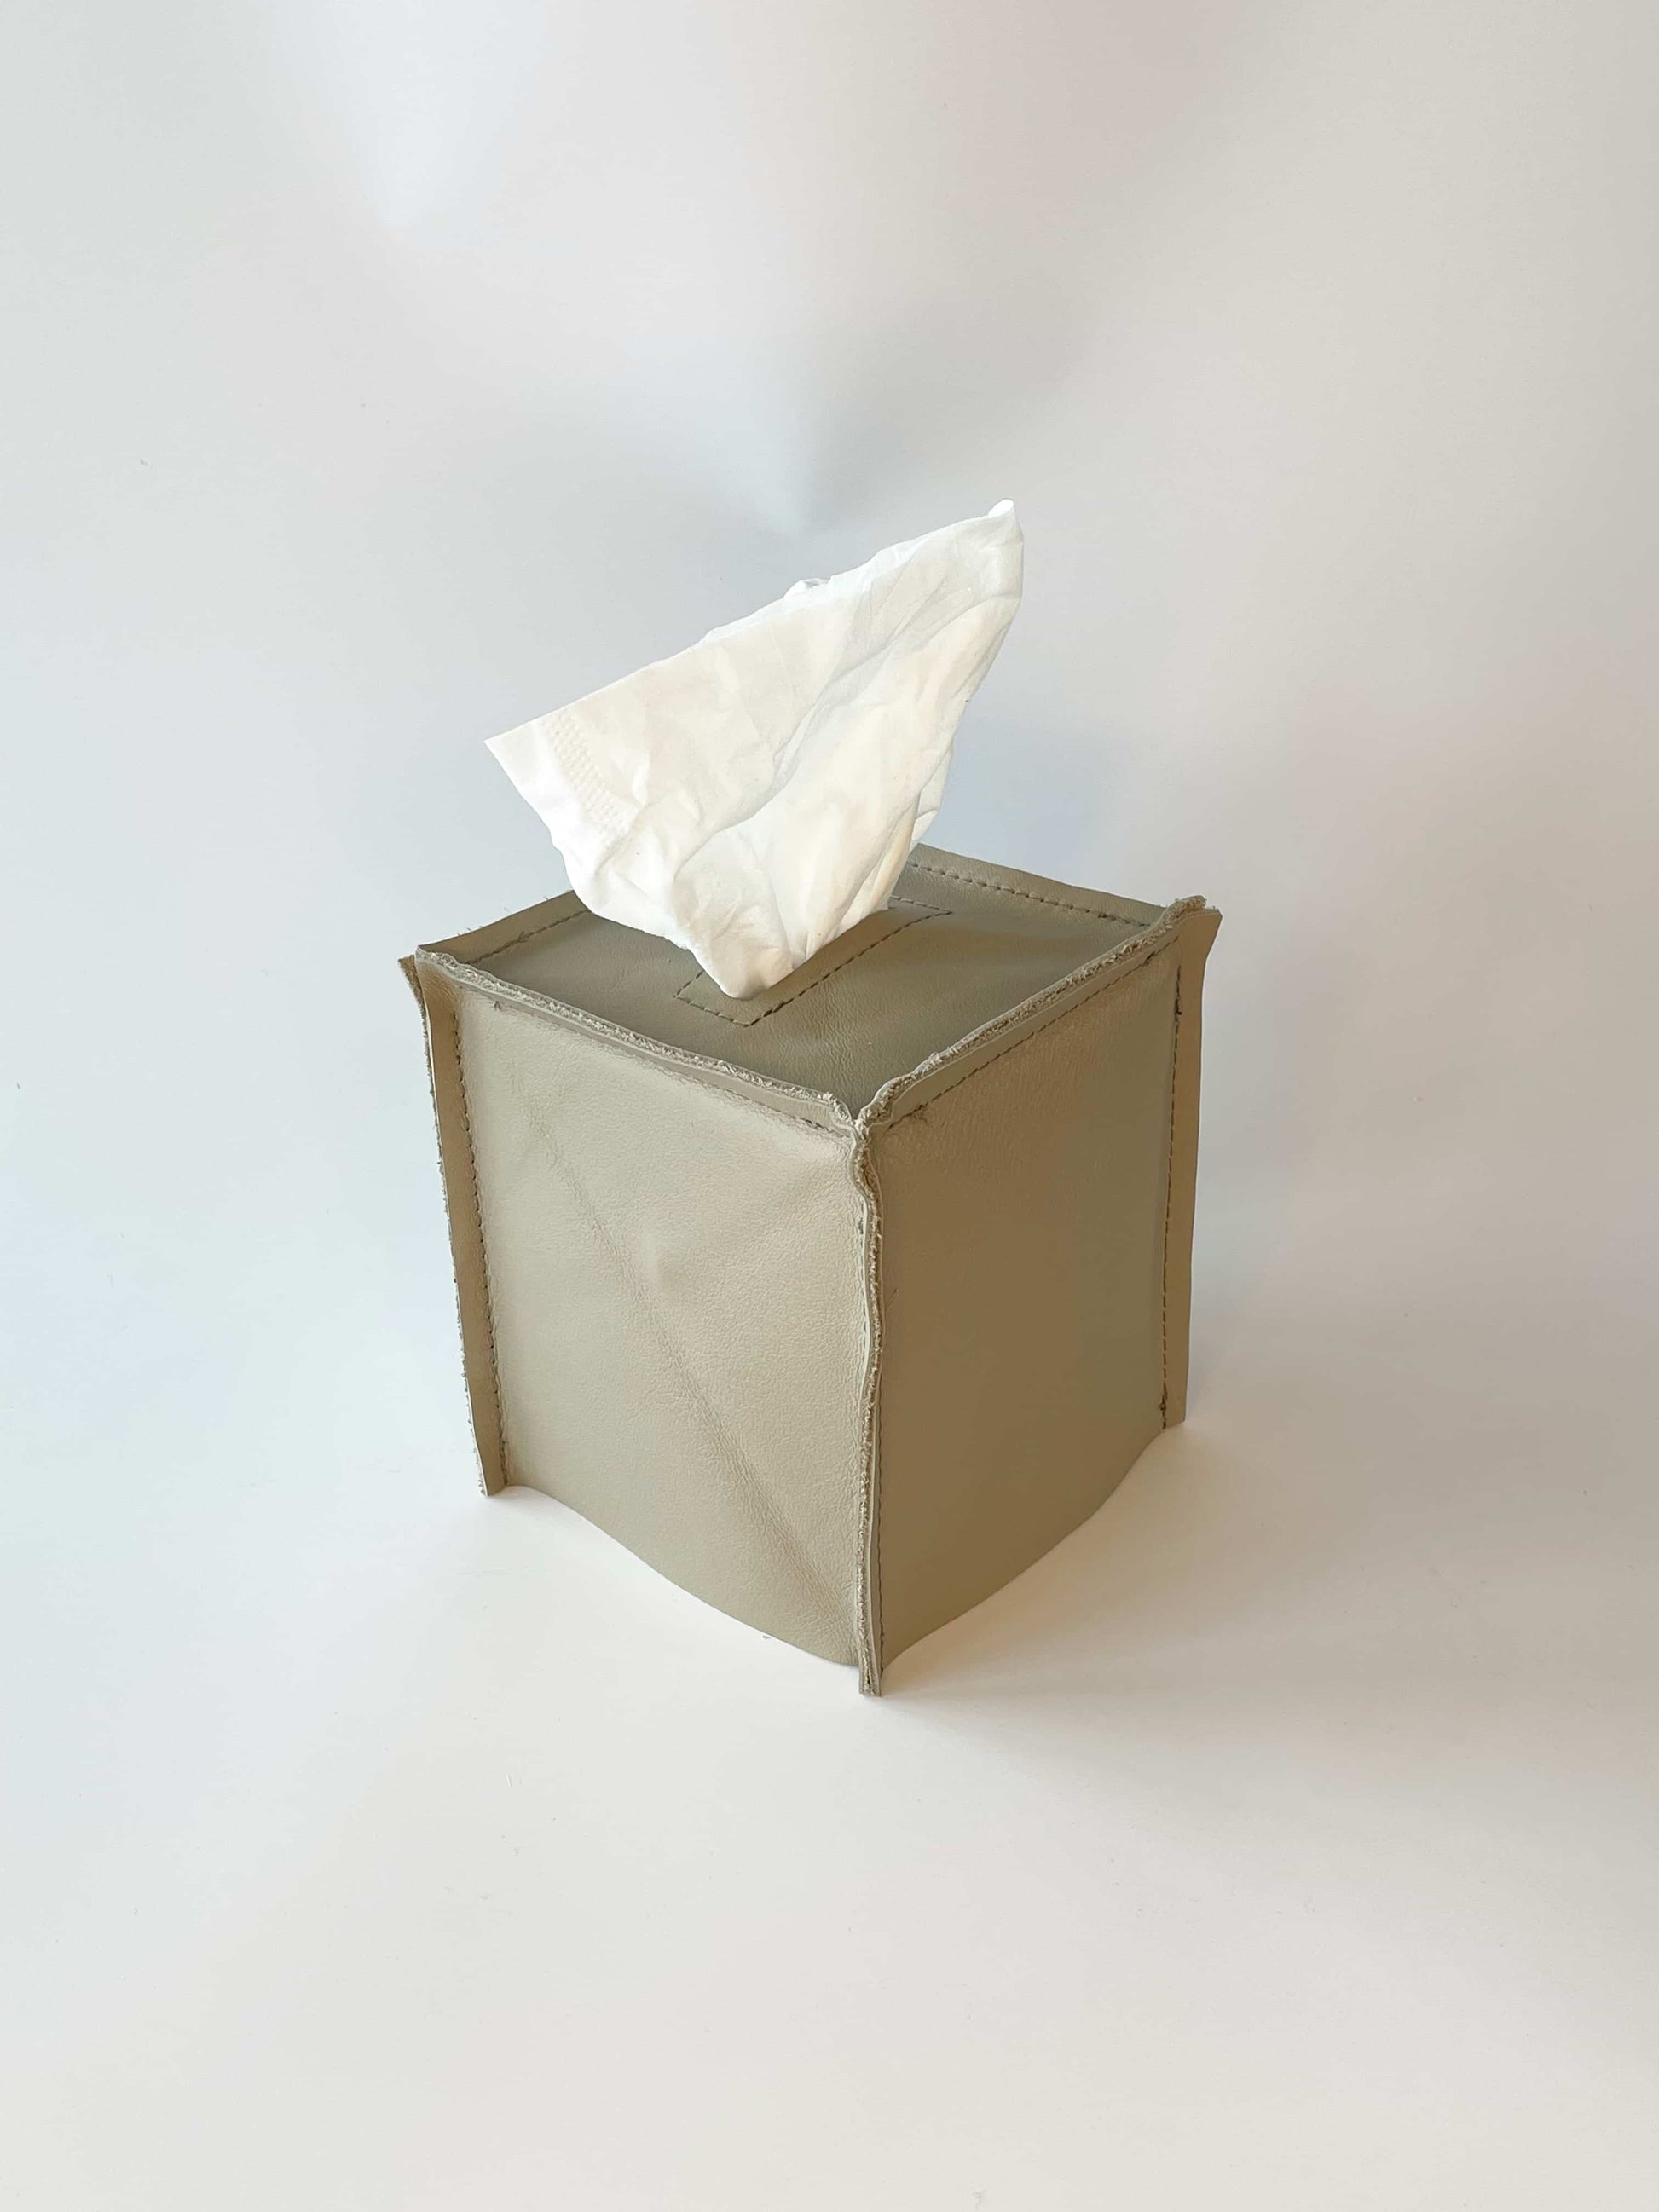 Vantage design leather tissue box cover in mink color